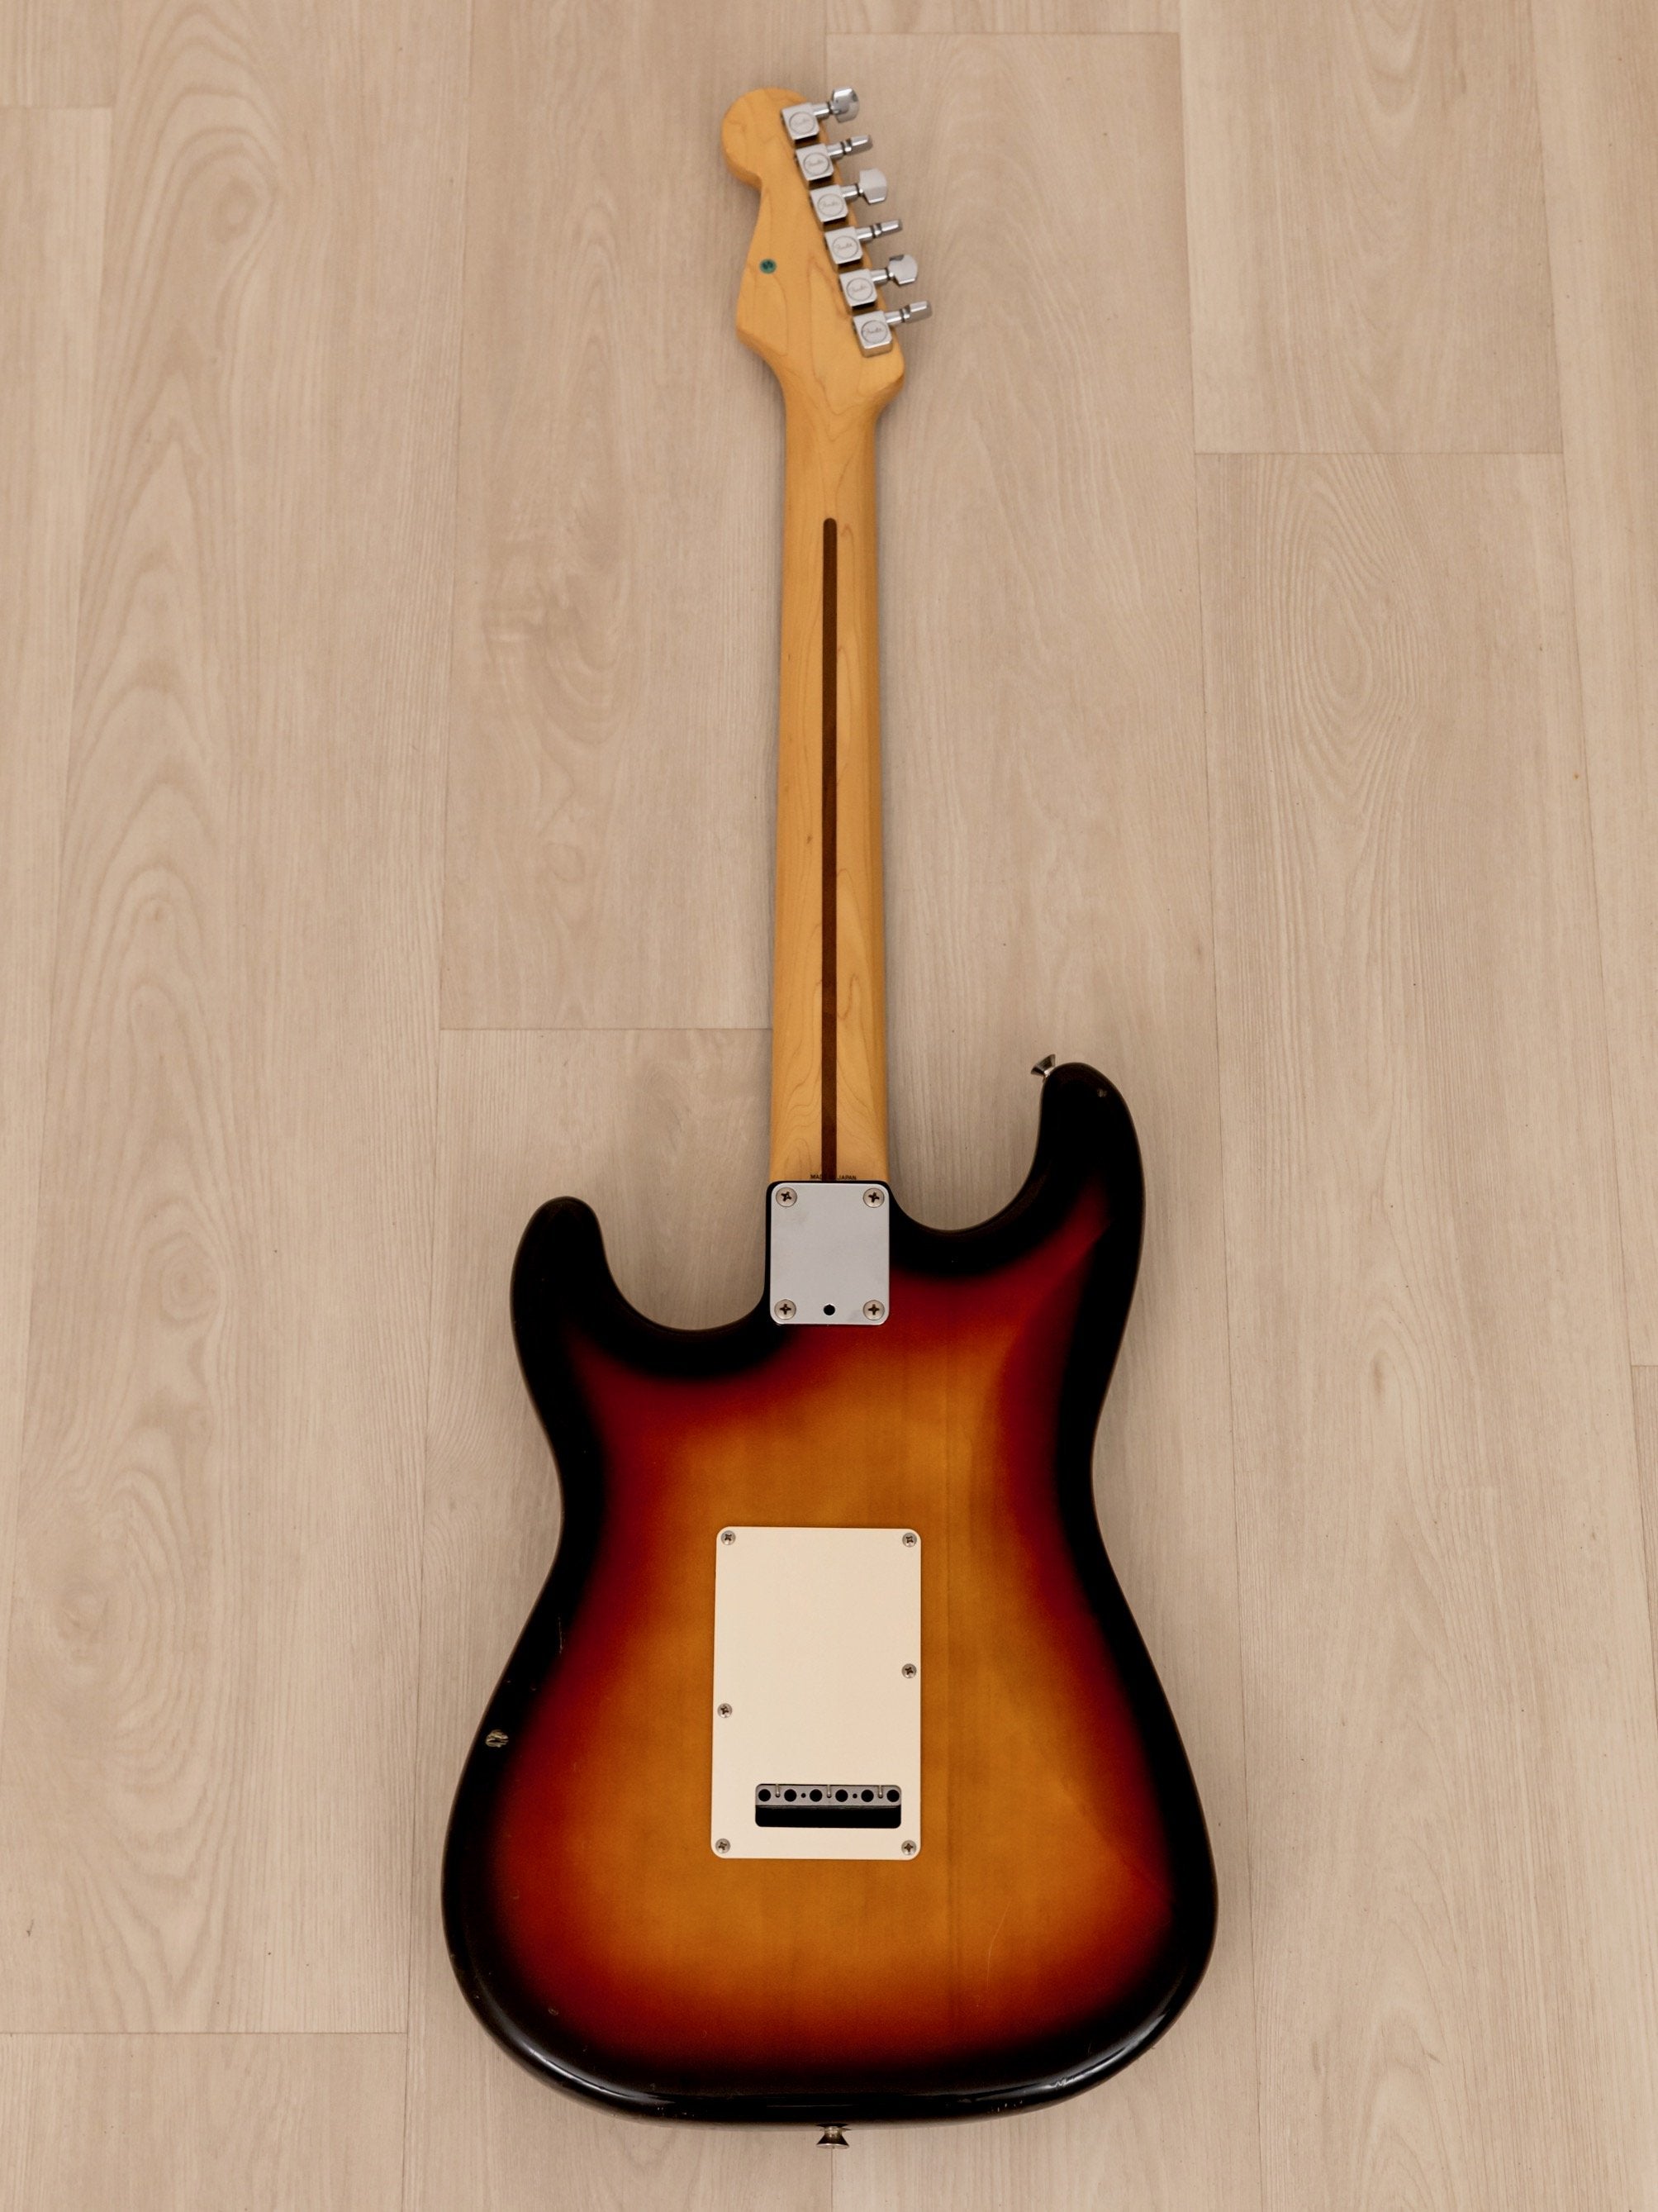 1989 Fender Japan Stratocaster, American Standard Template w/ Rosewood Board, Schaller Hardware, MIJ Fujigen